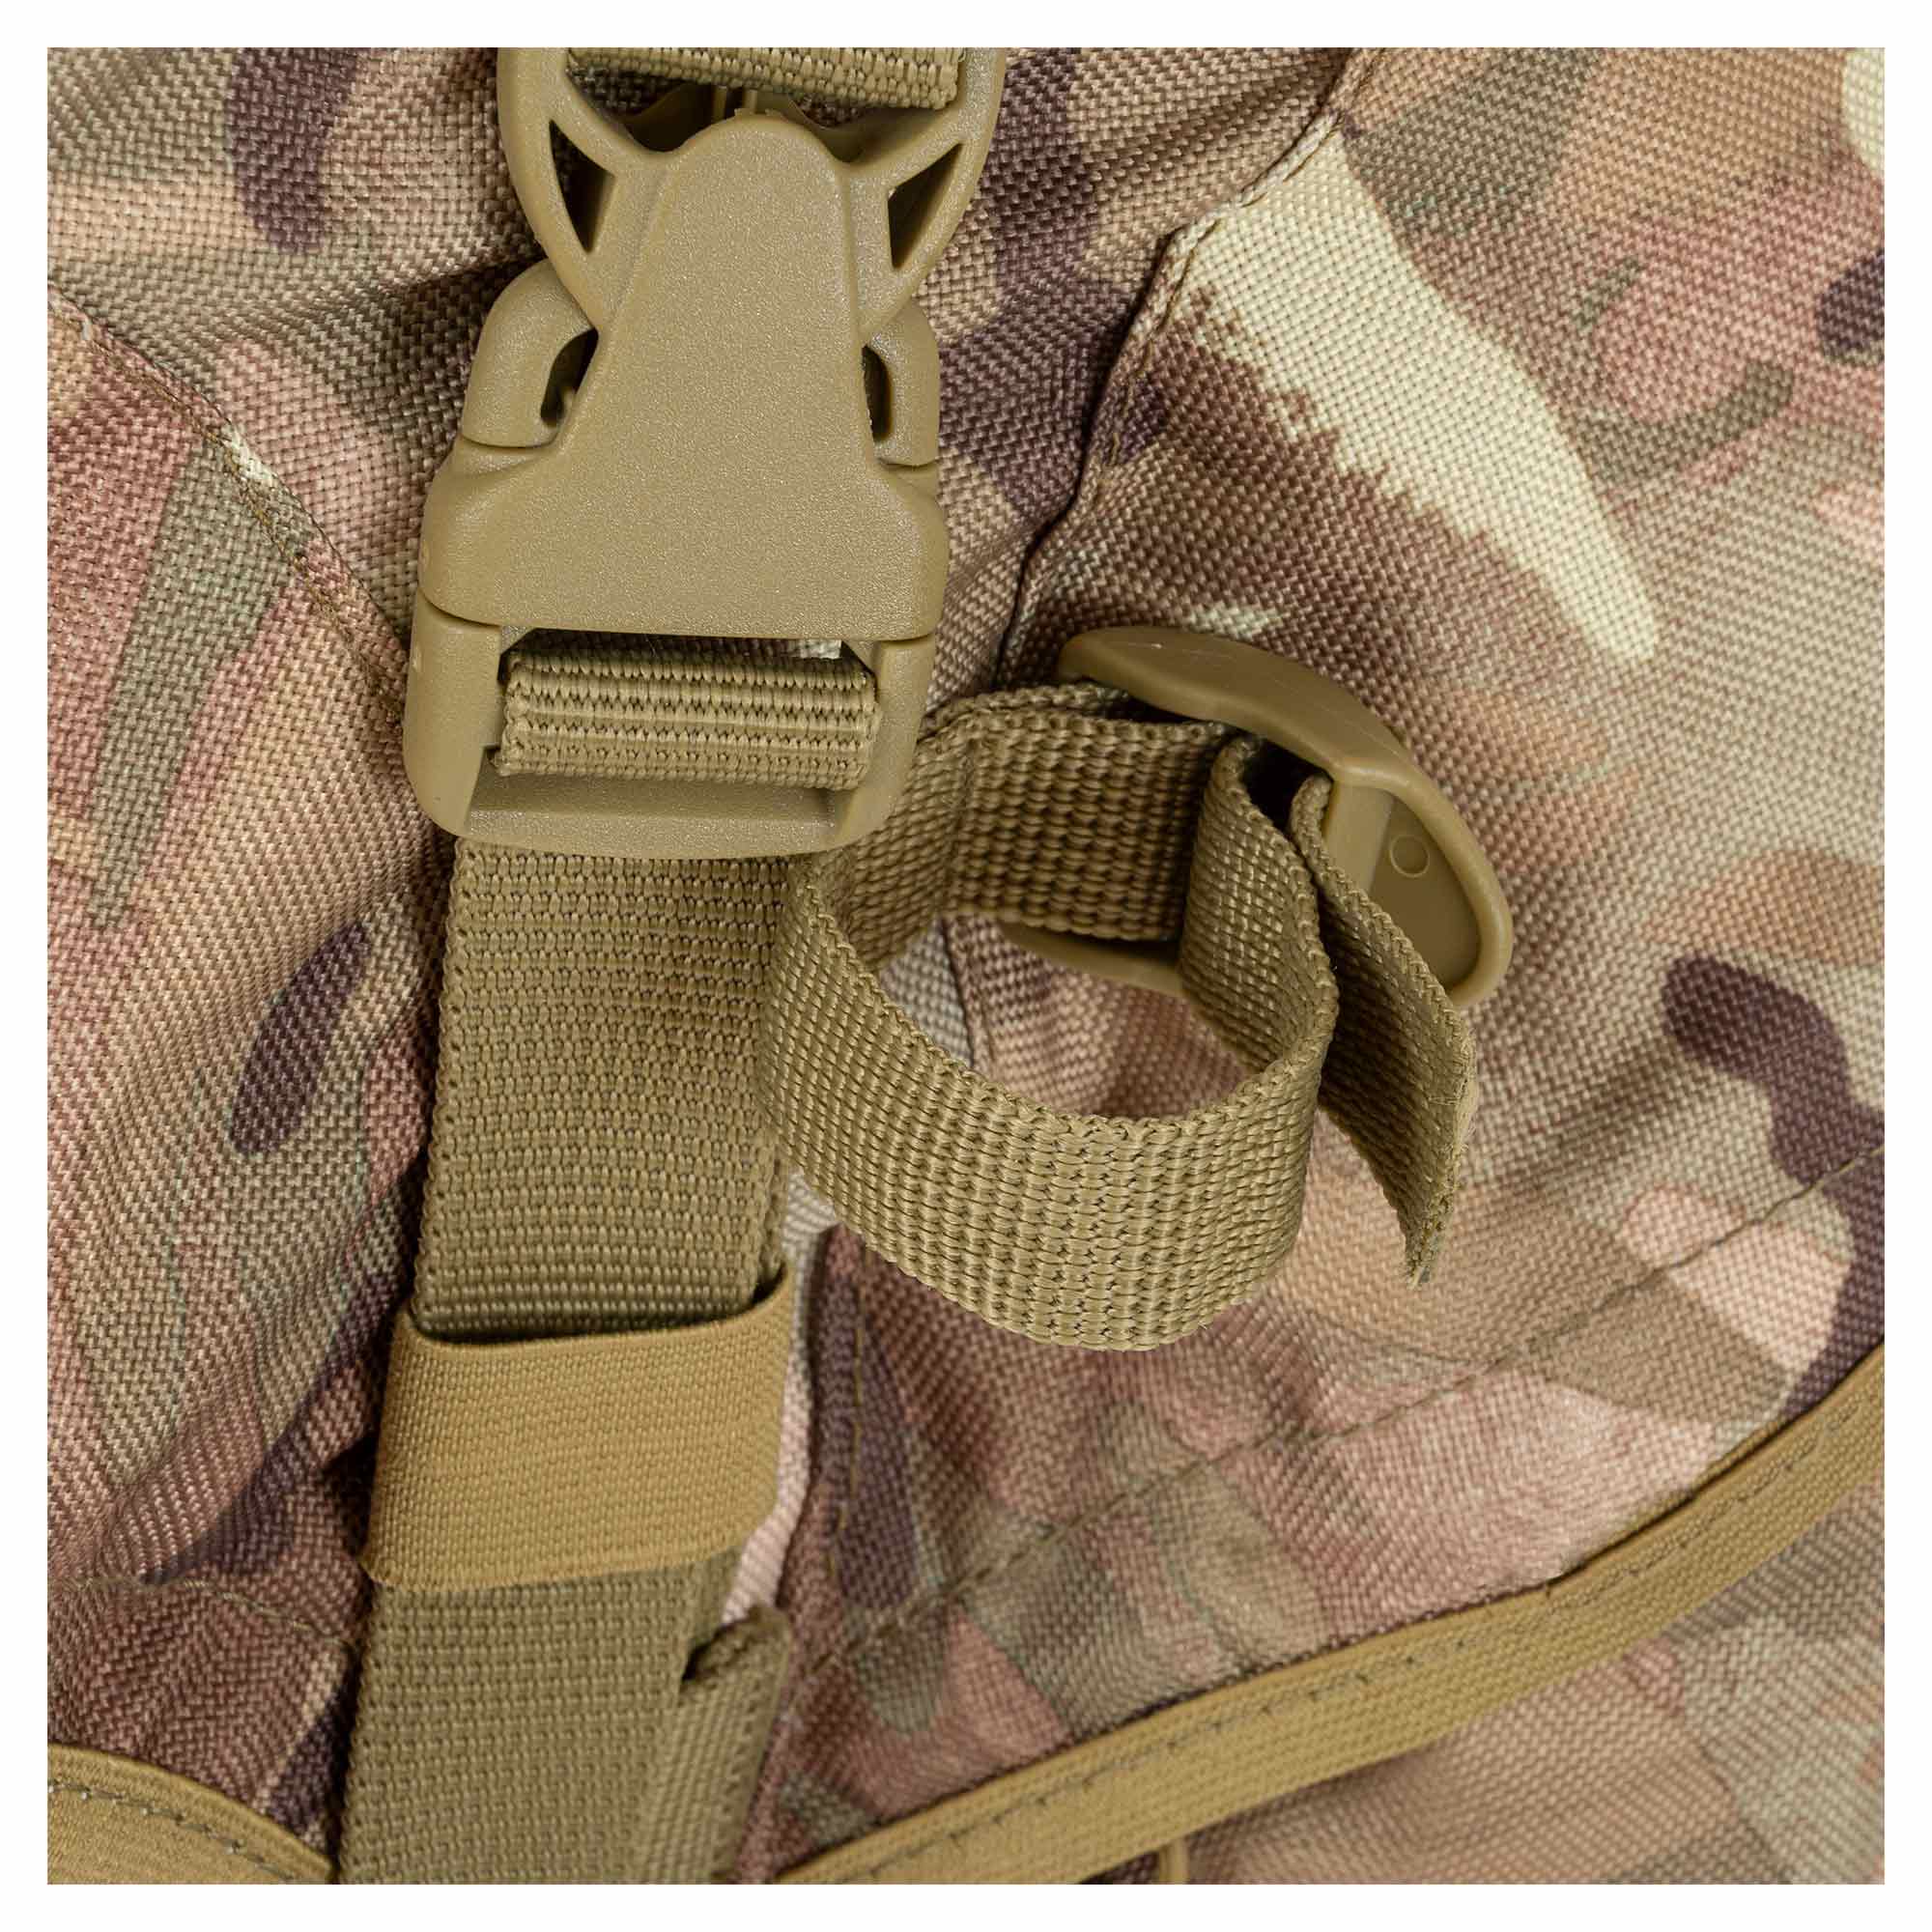 Highlander HMTC Camo Combat Wash Kit Bag All Terrain Multi Camouflage 